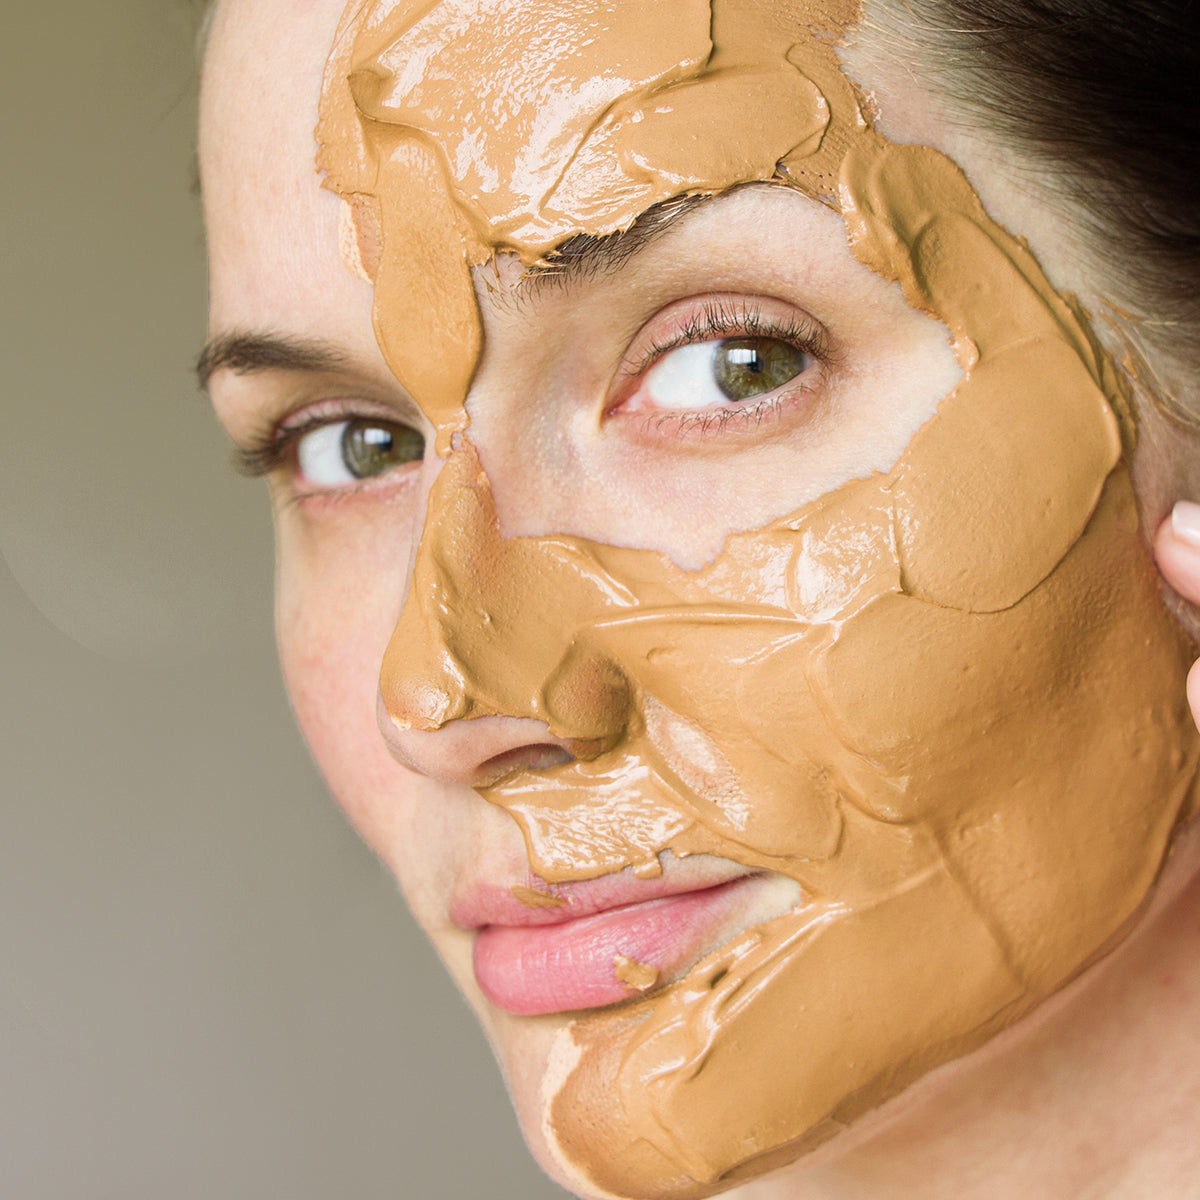 Why use Turmeric and Sandalwood Face Mask?